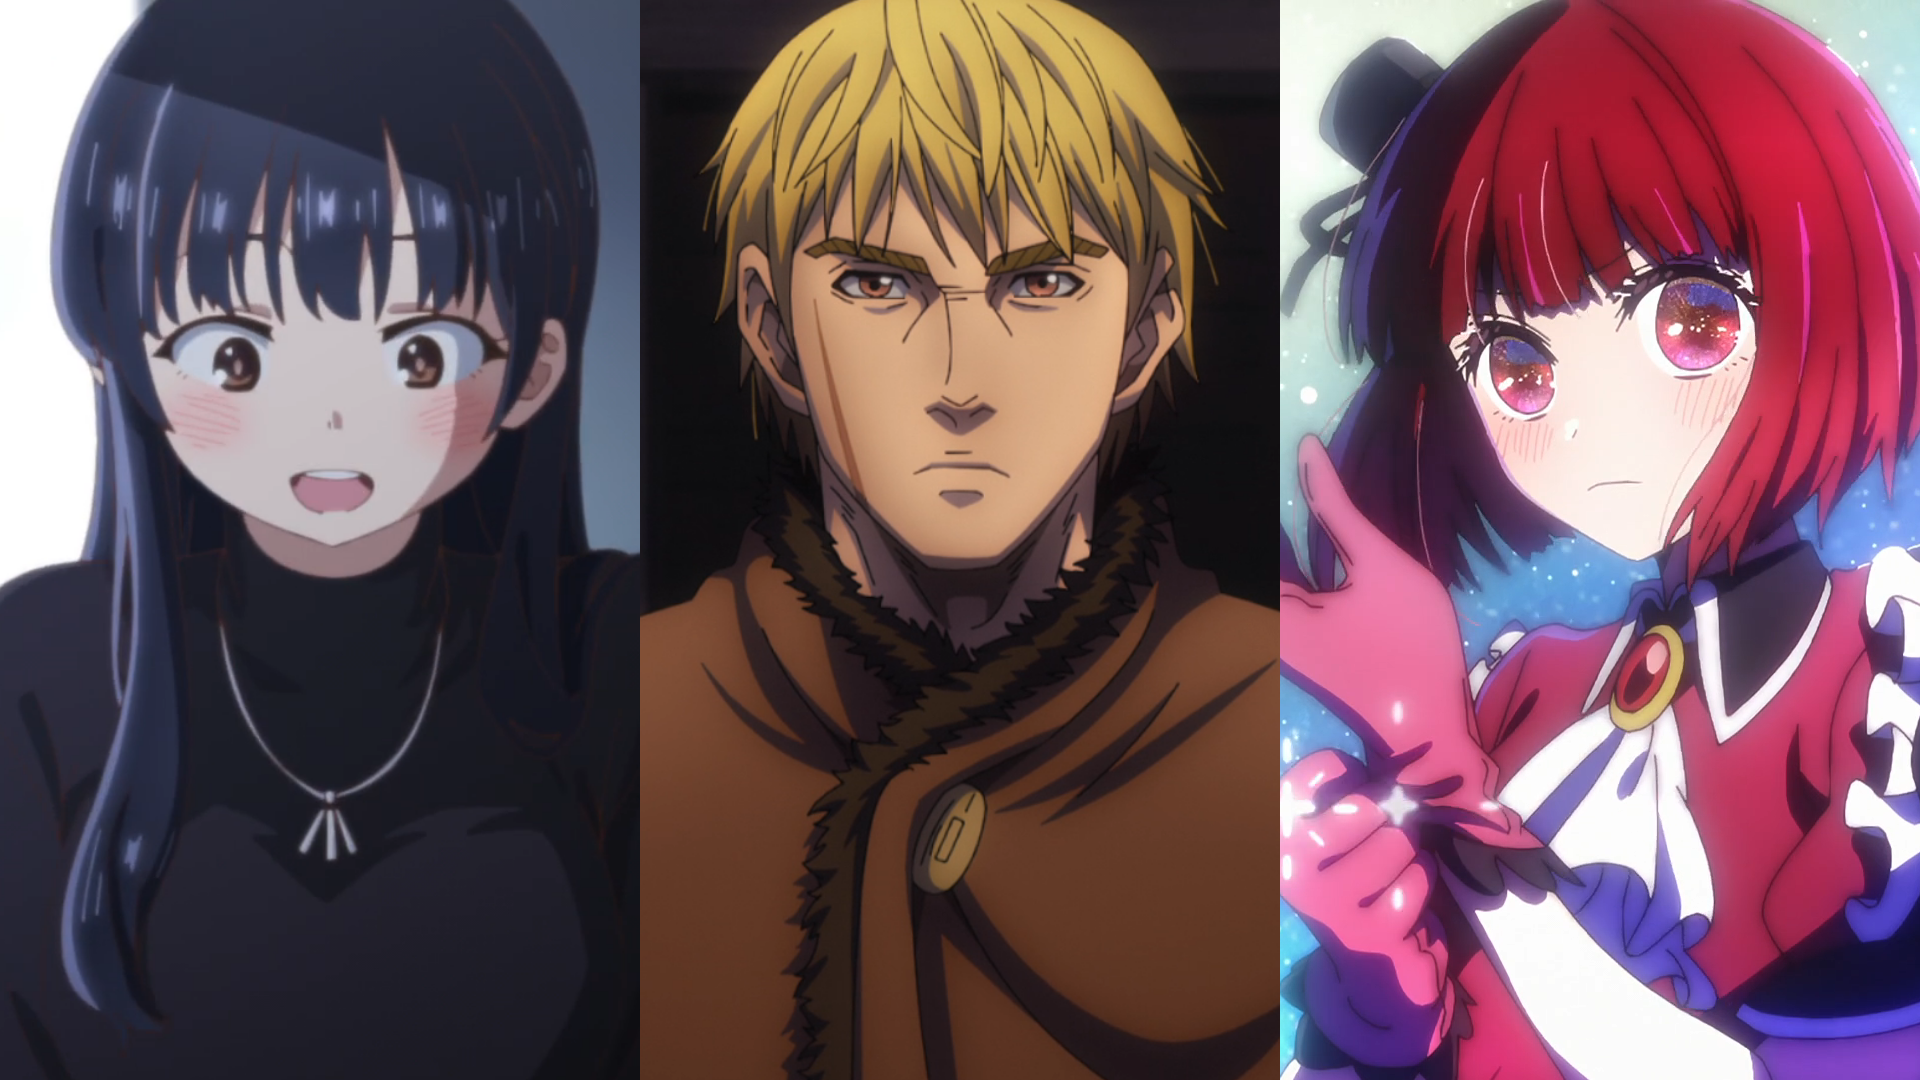 Summer 2023 Anime Rankings – Week 6 - Anime Corner